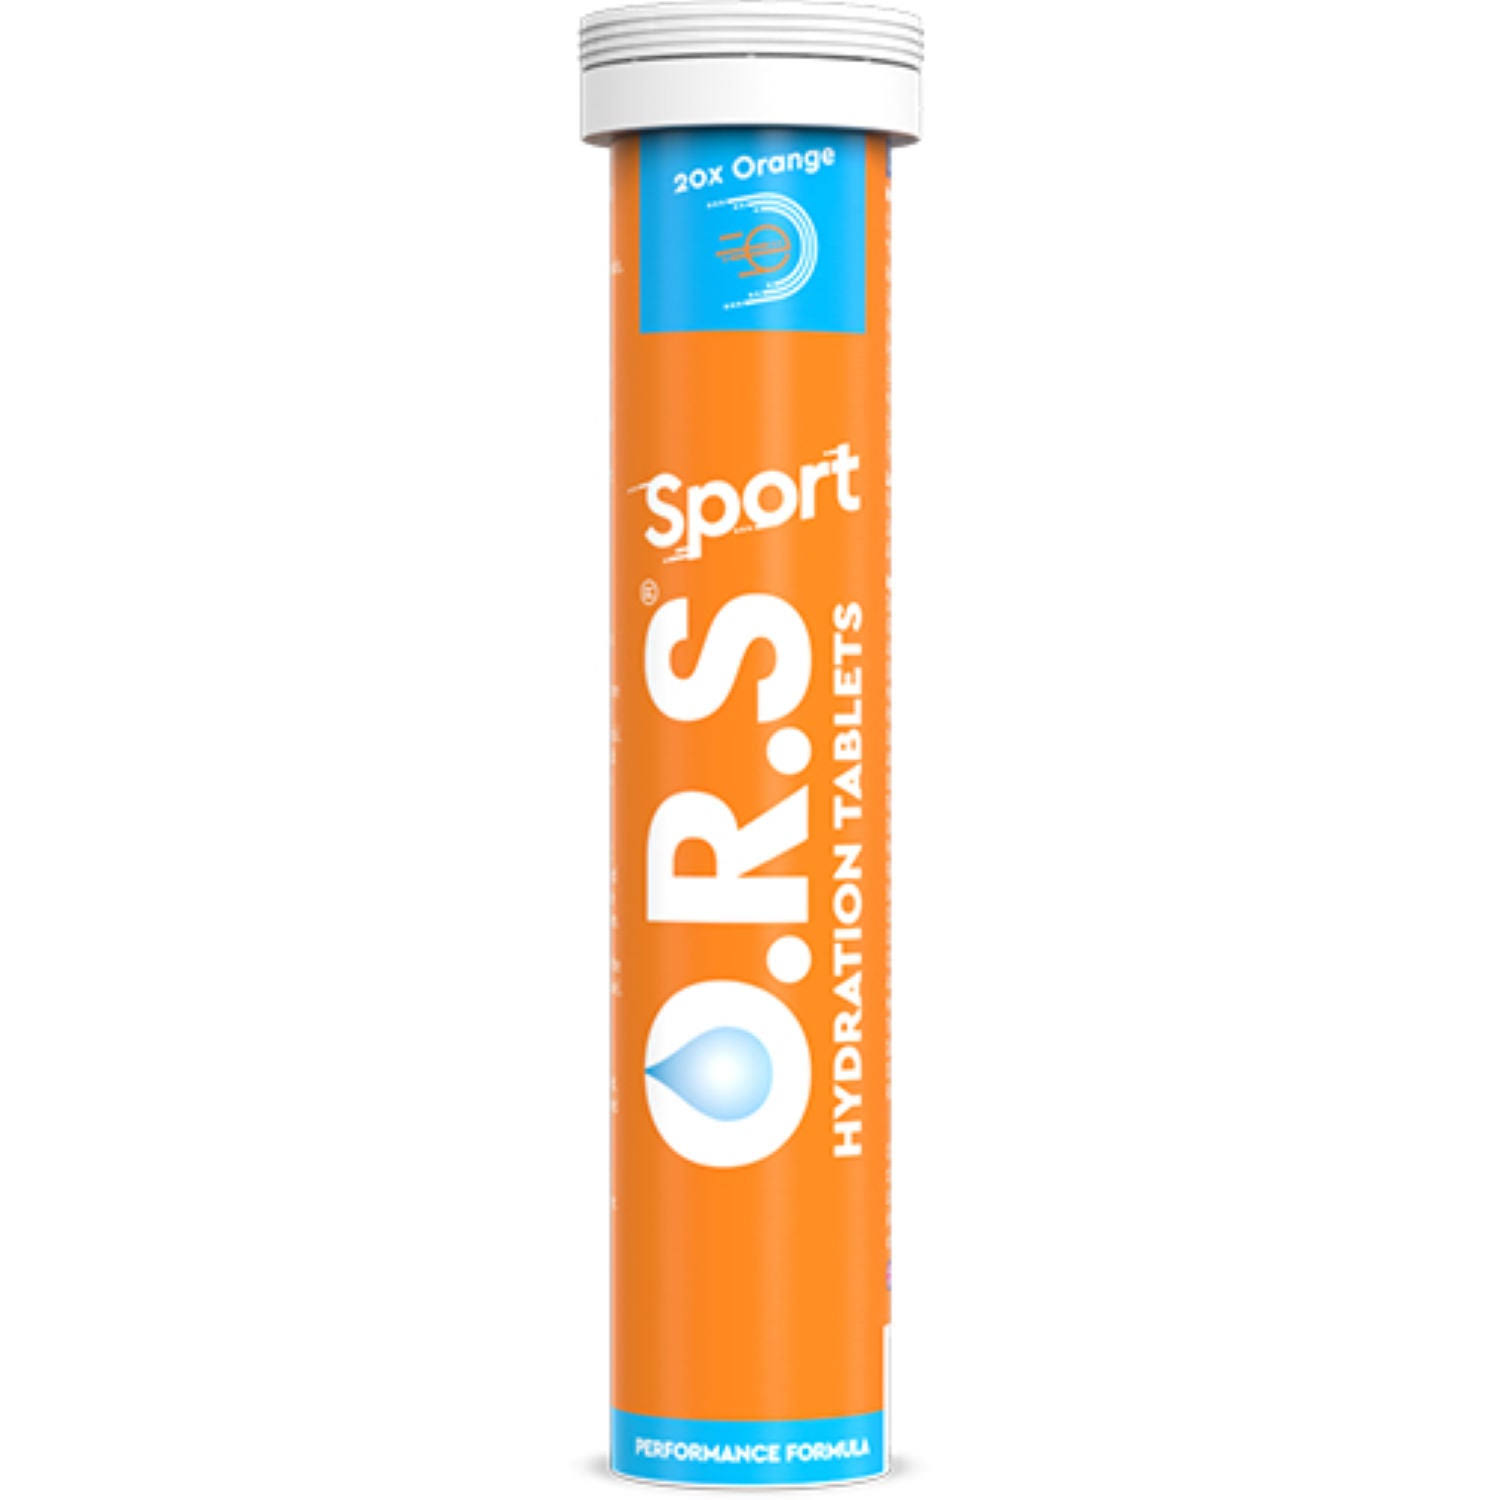 O.R.S Sport Hydration Tablets - Orange, 20ct